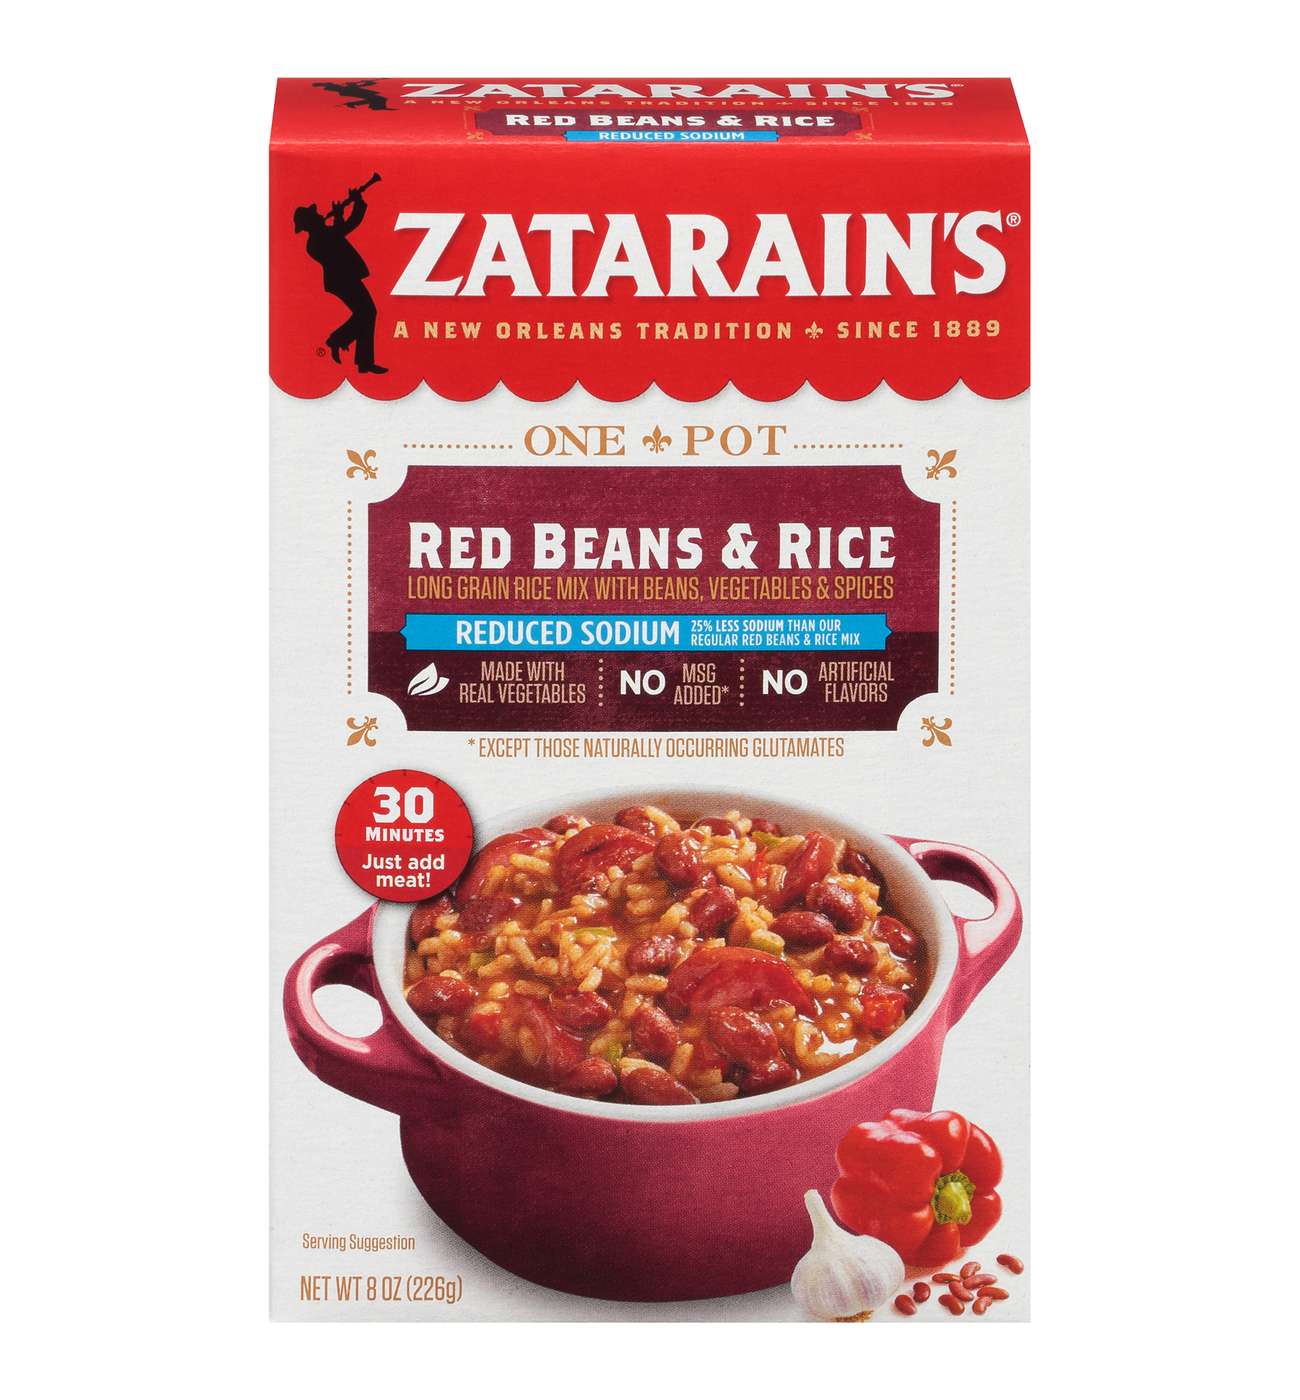 Zatarain's Reduced Sodium Red Beans & Rice; image 1 of 4